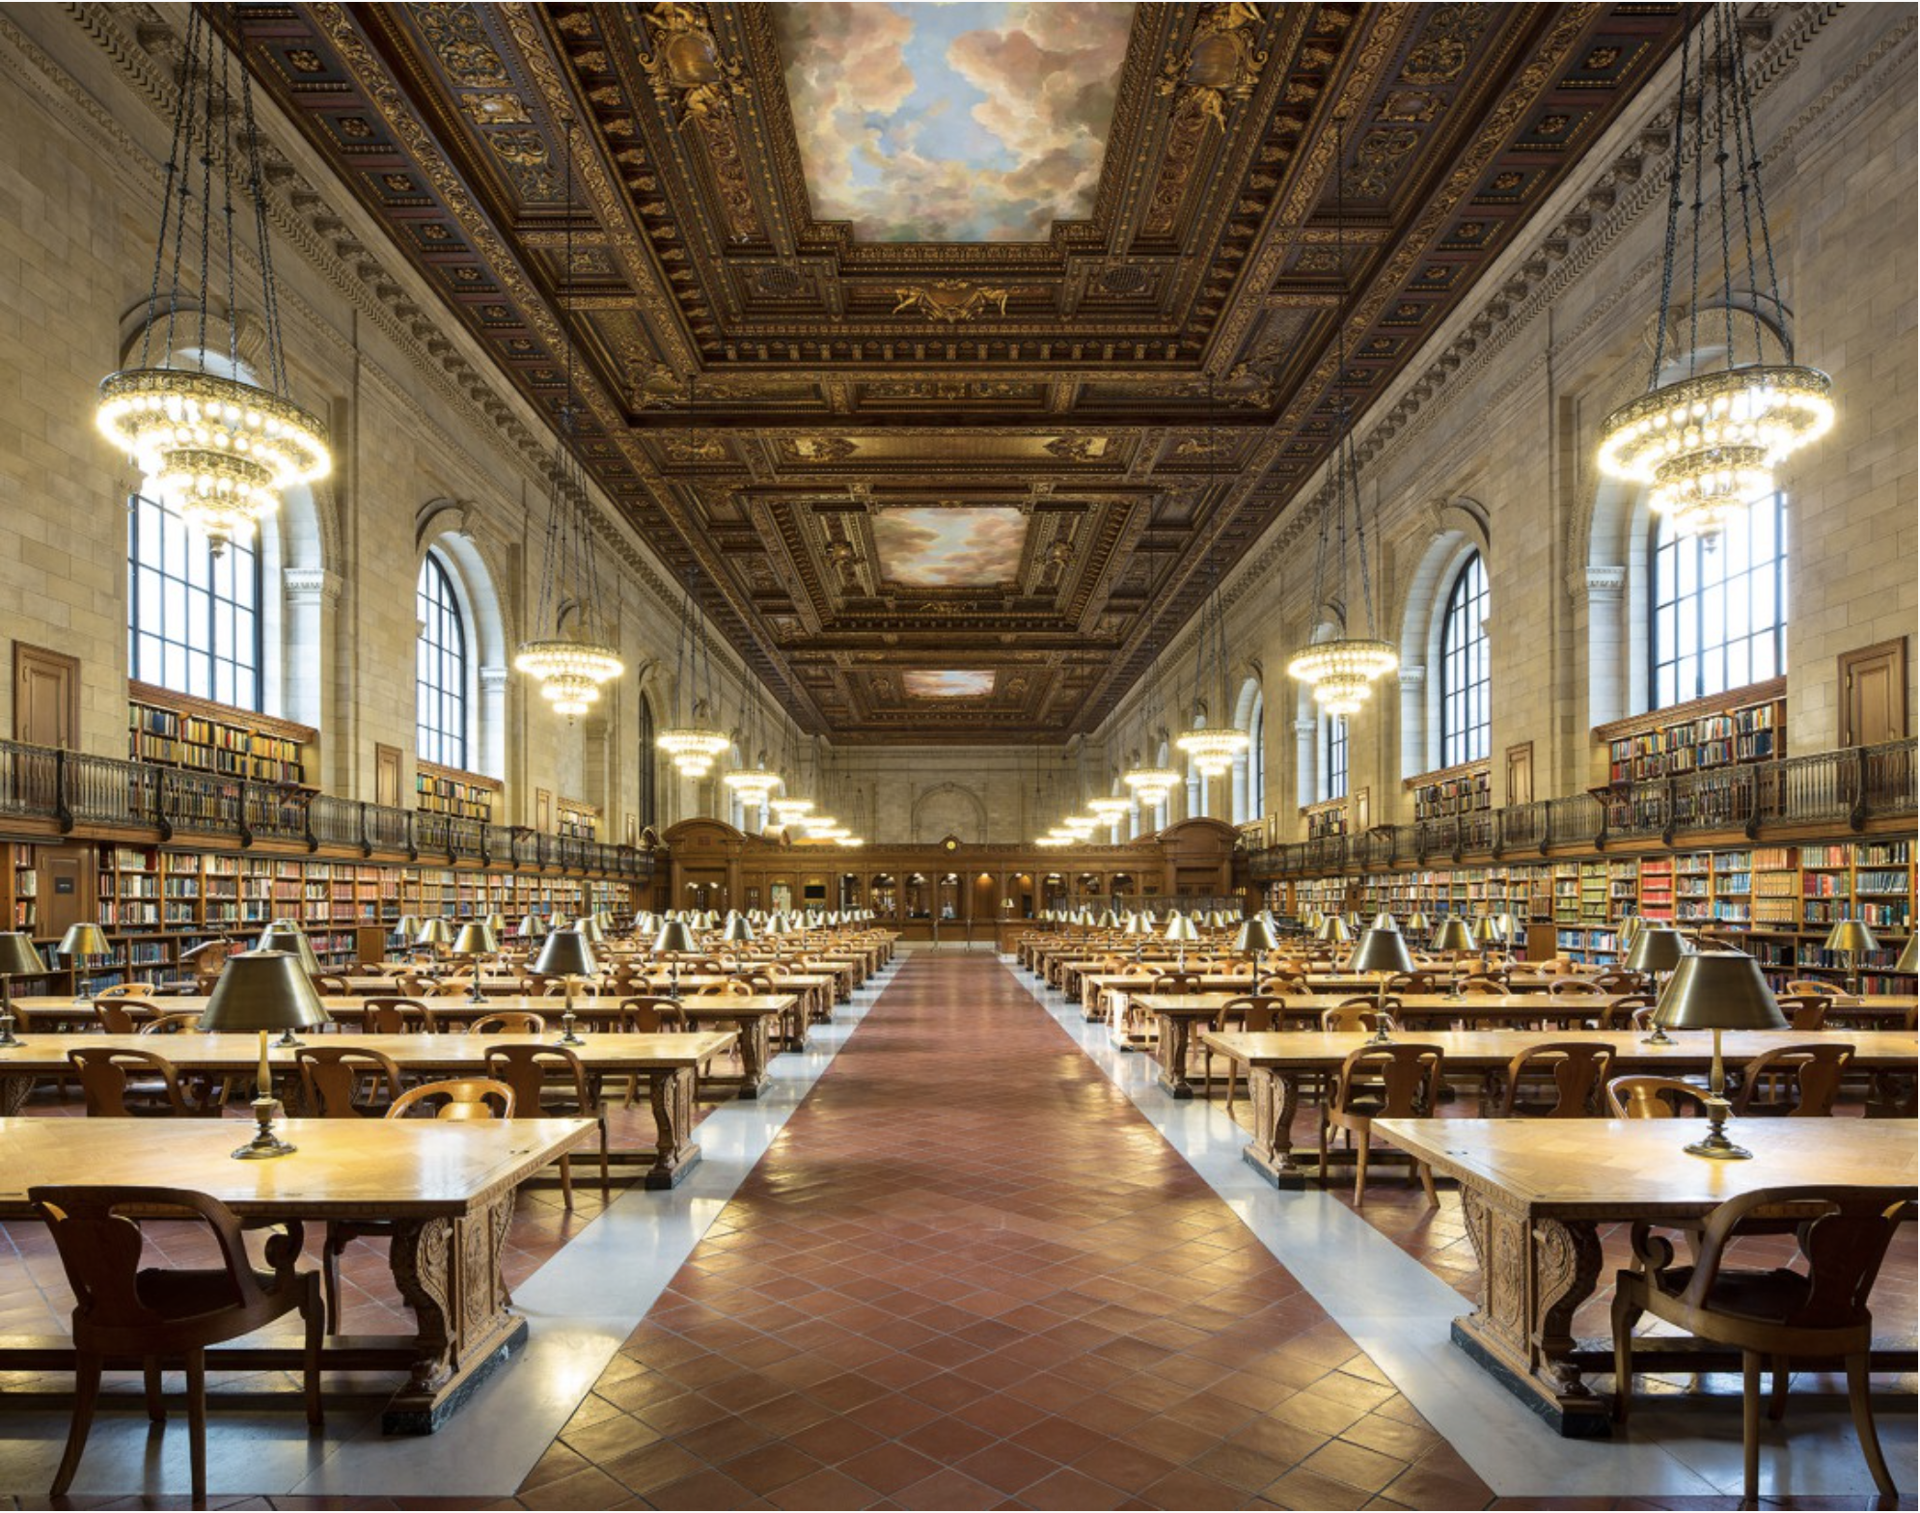 Rose Main Reading Room IV, New York Public Library, New York, USA by Reinhard Gorner